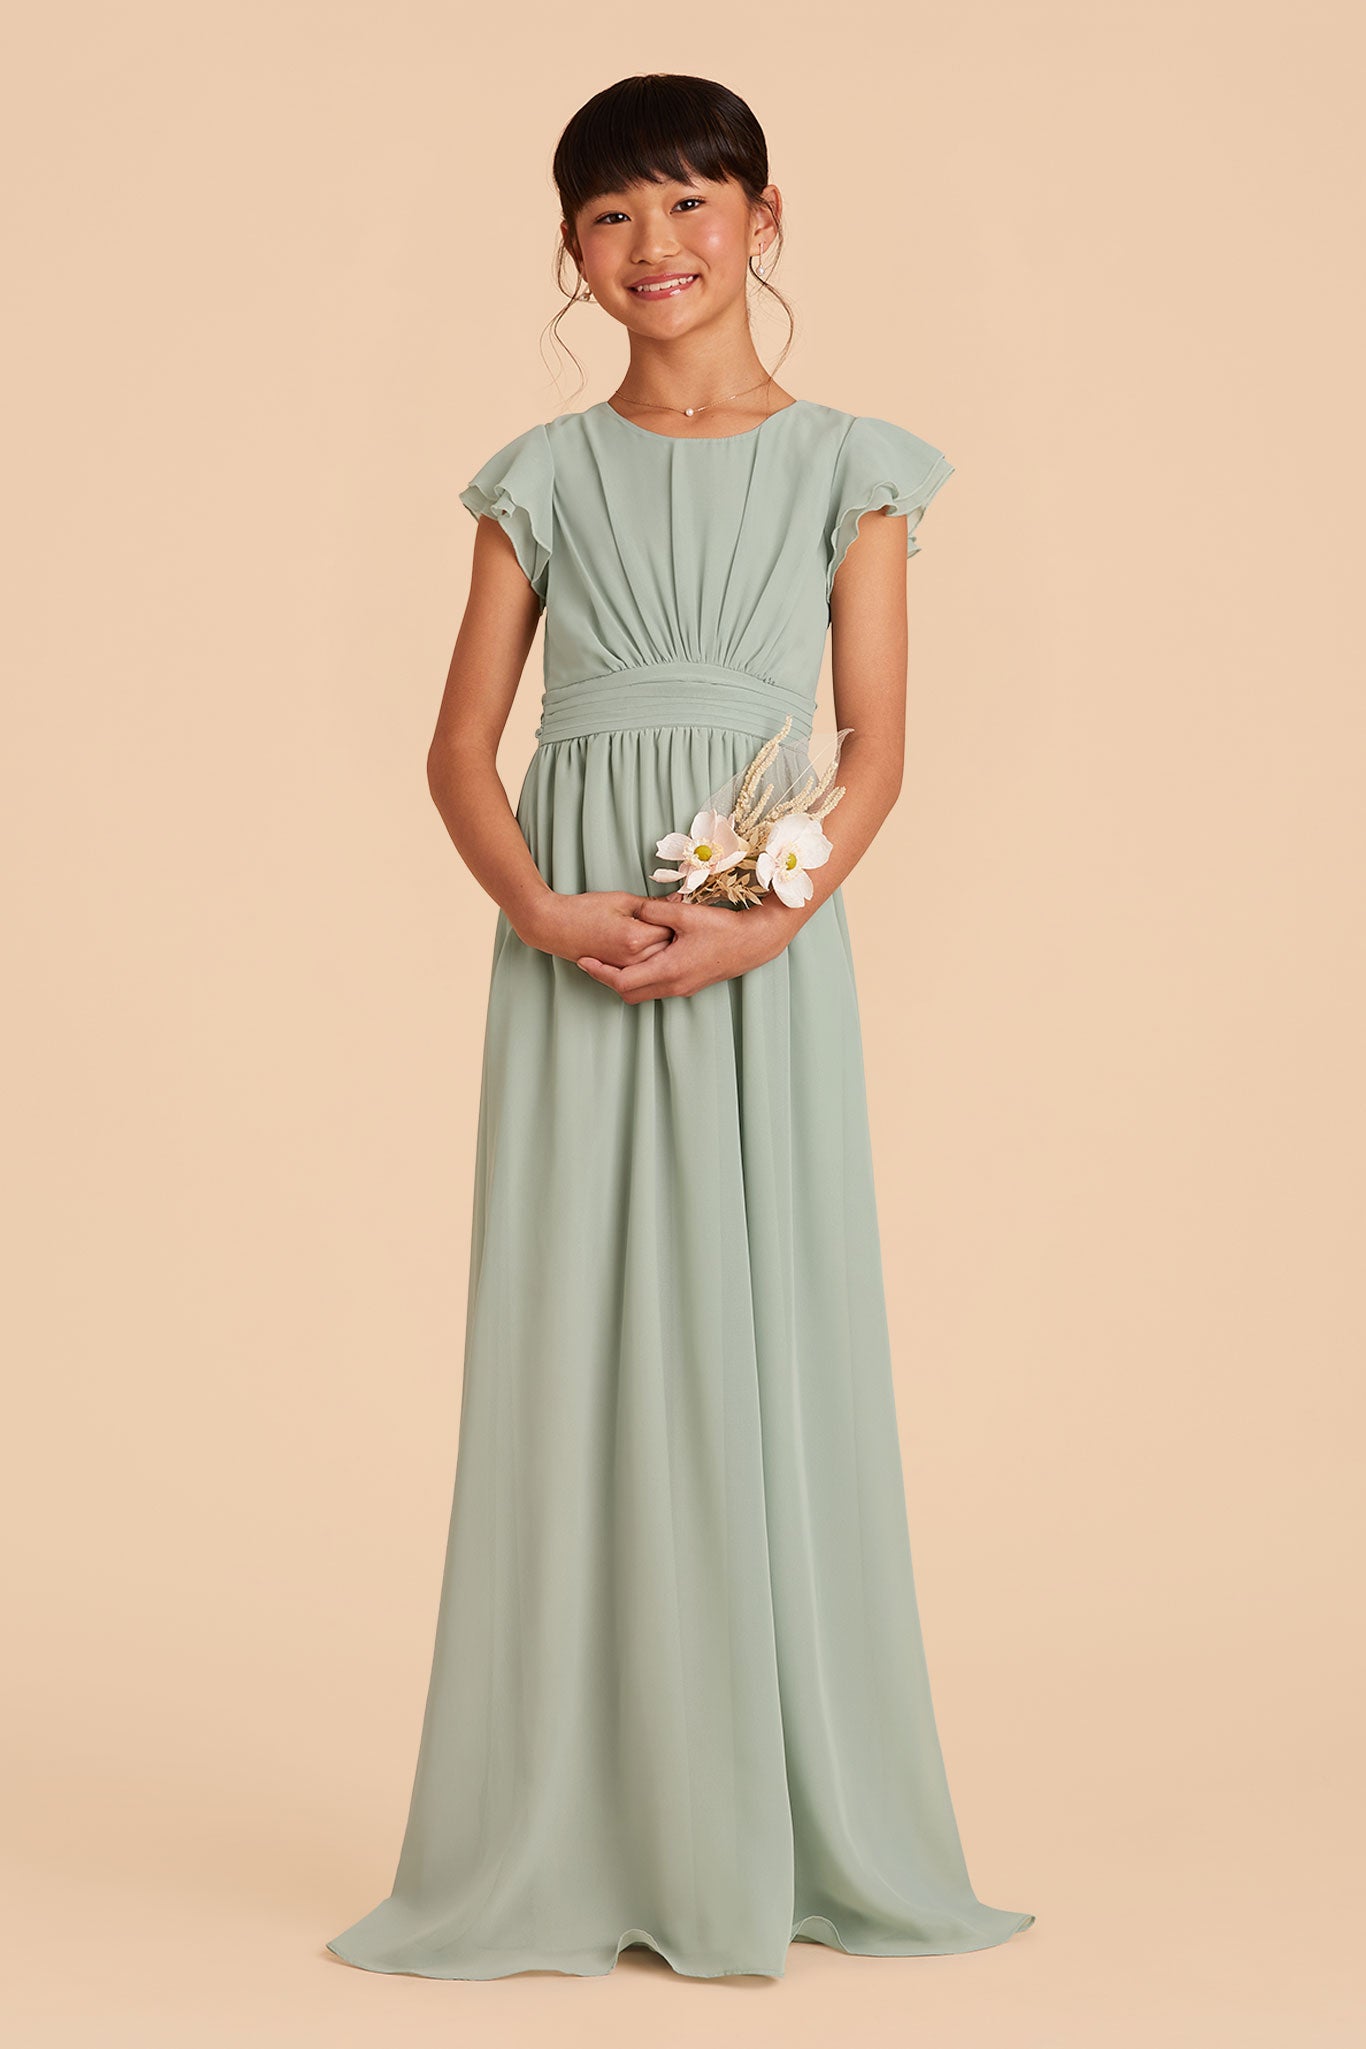 sage light green frilly-sleeved floor length junior bridesmaid dress 